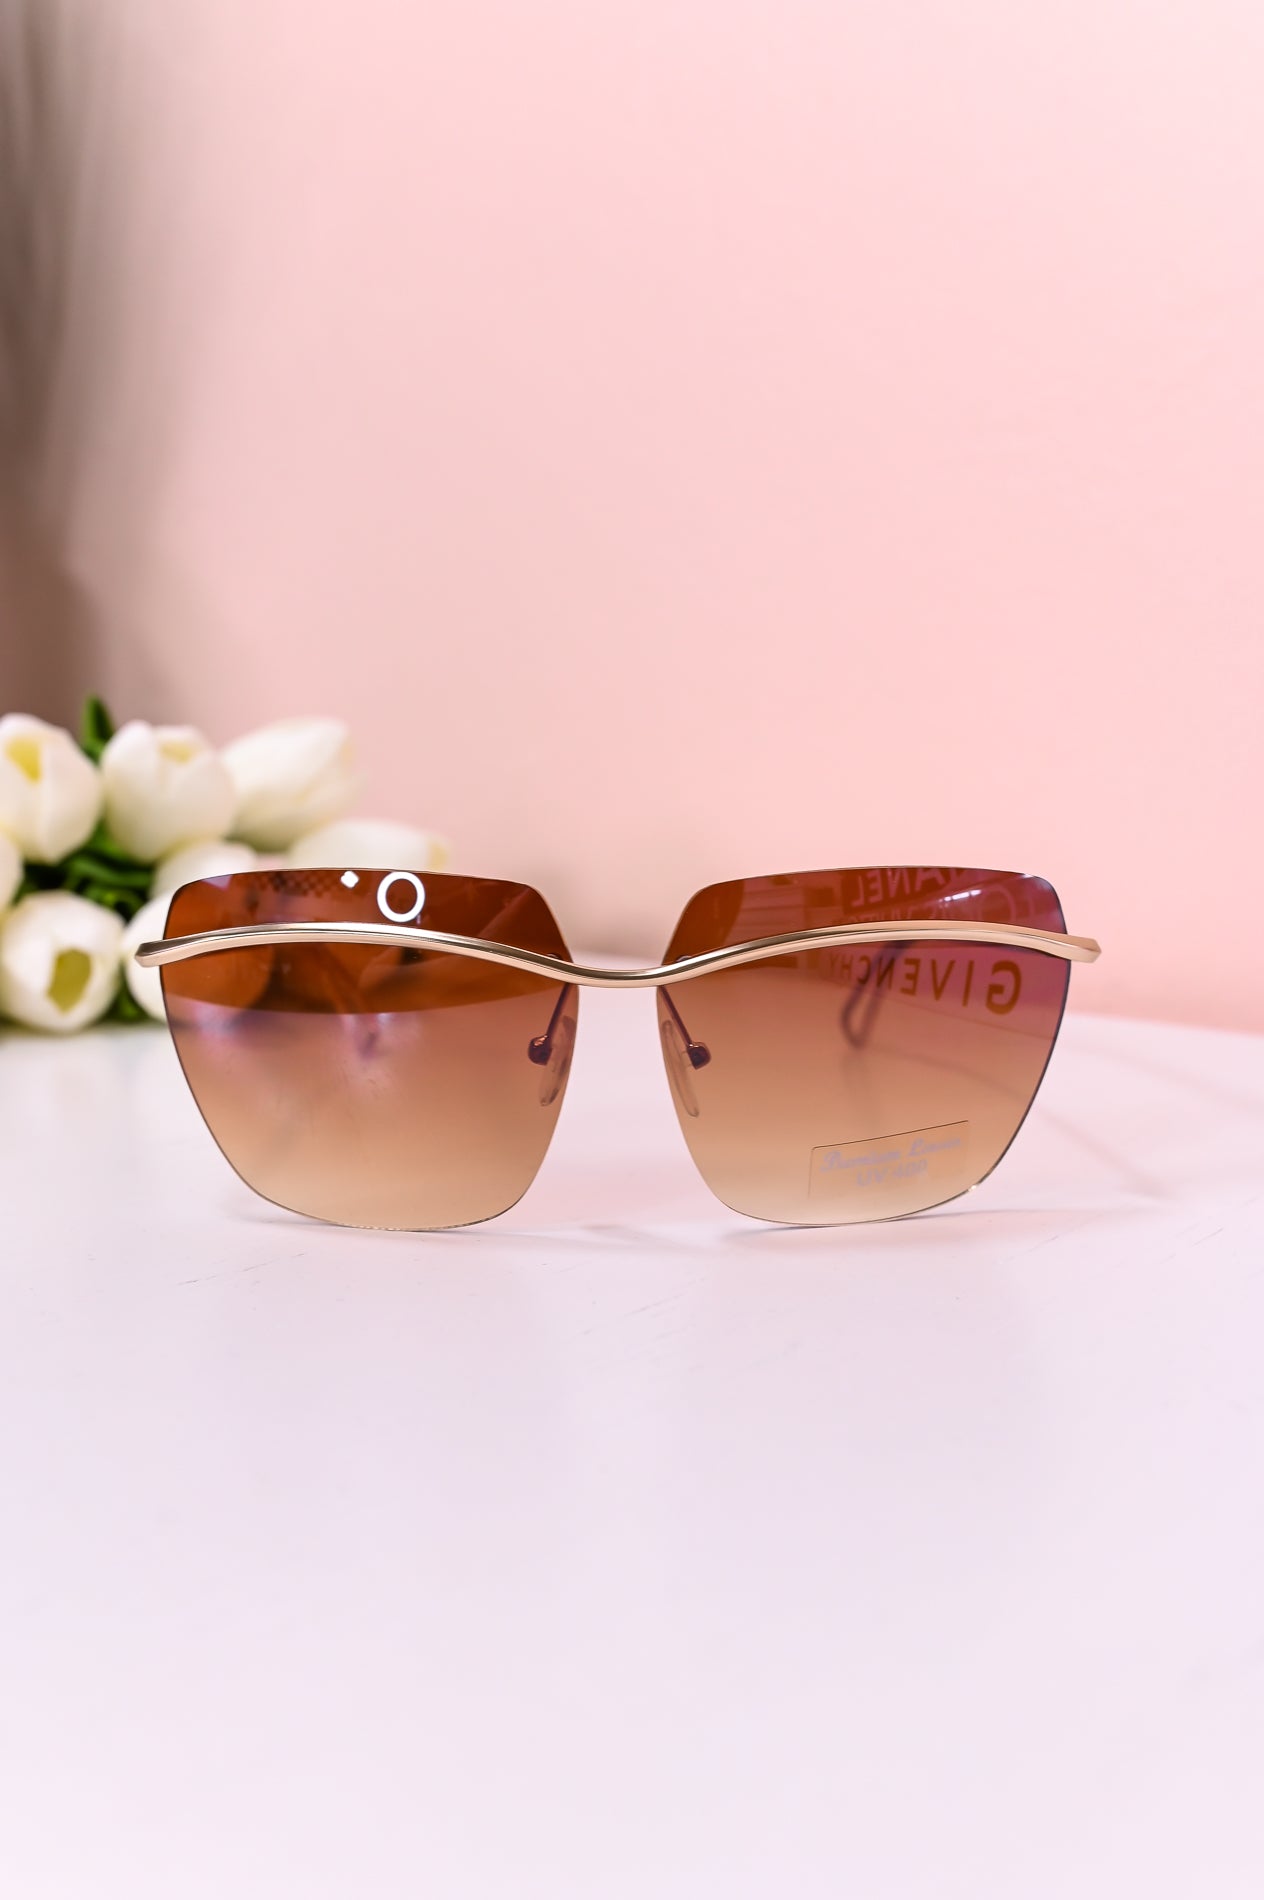 Taupe/Bronze Sunglasses - SGL307TA - FREE hard case